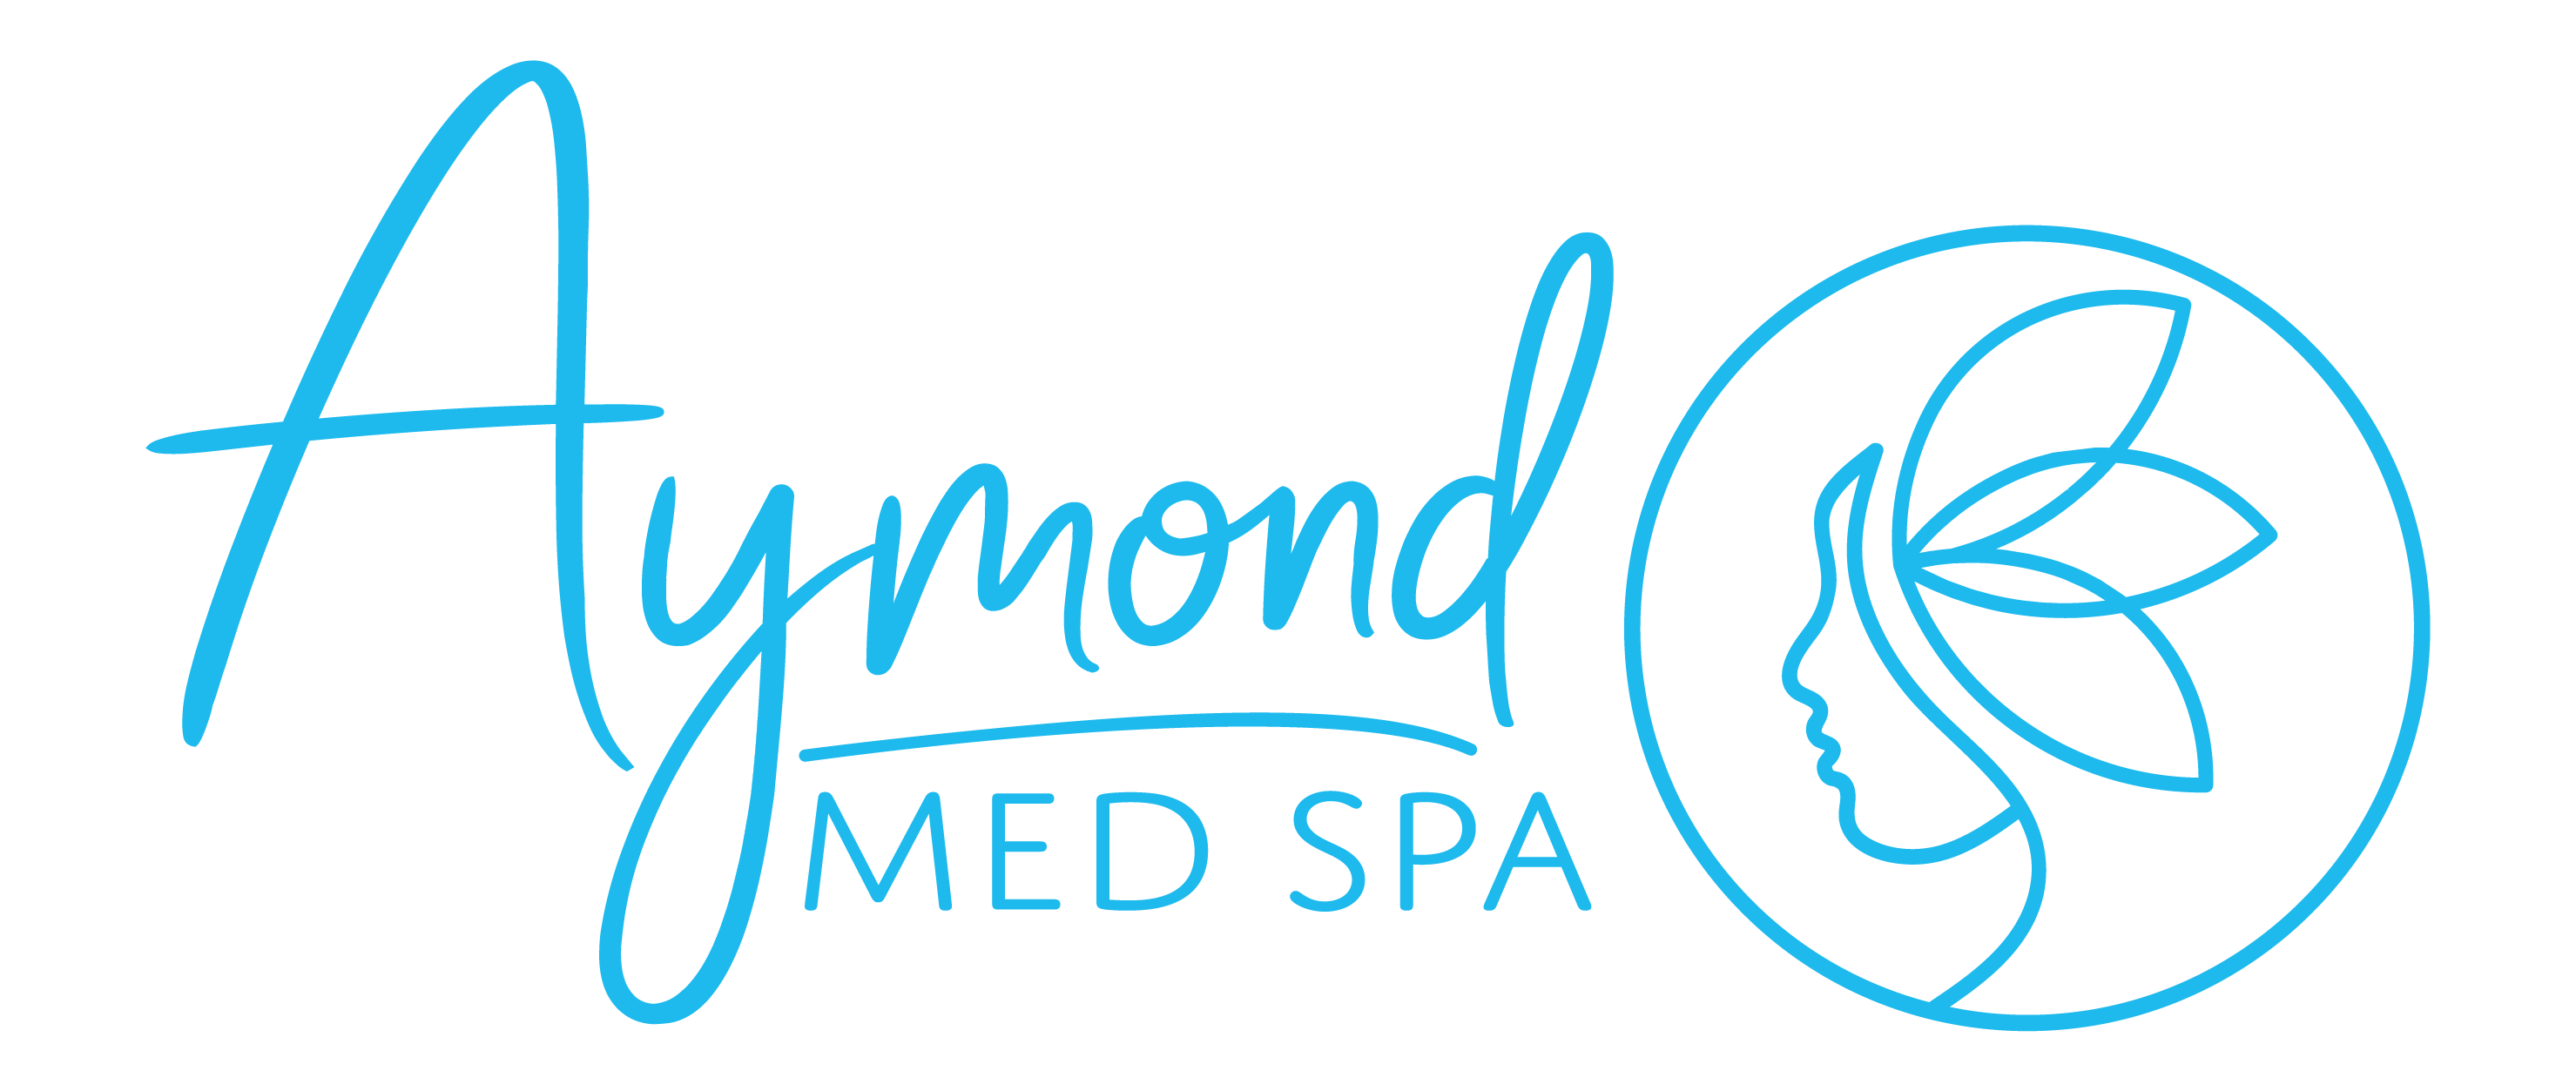 Aymond Medical Spa